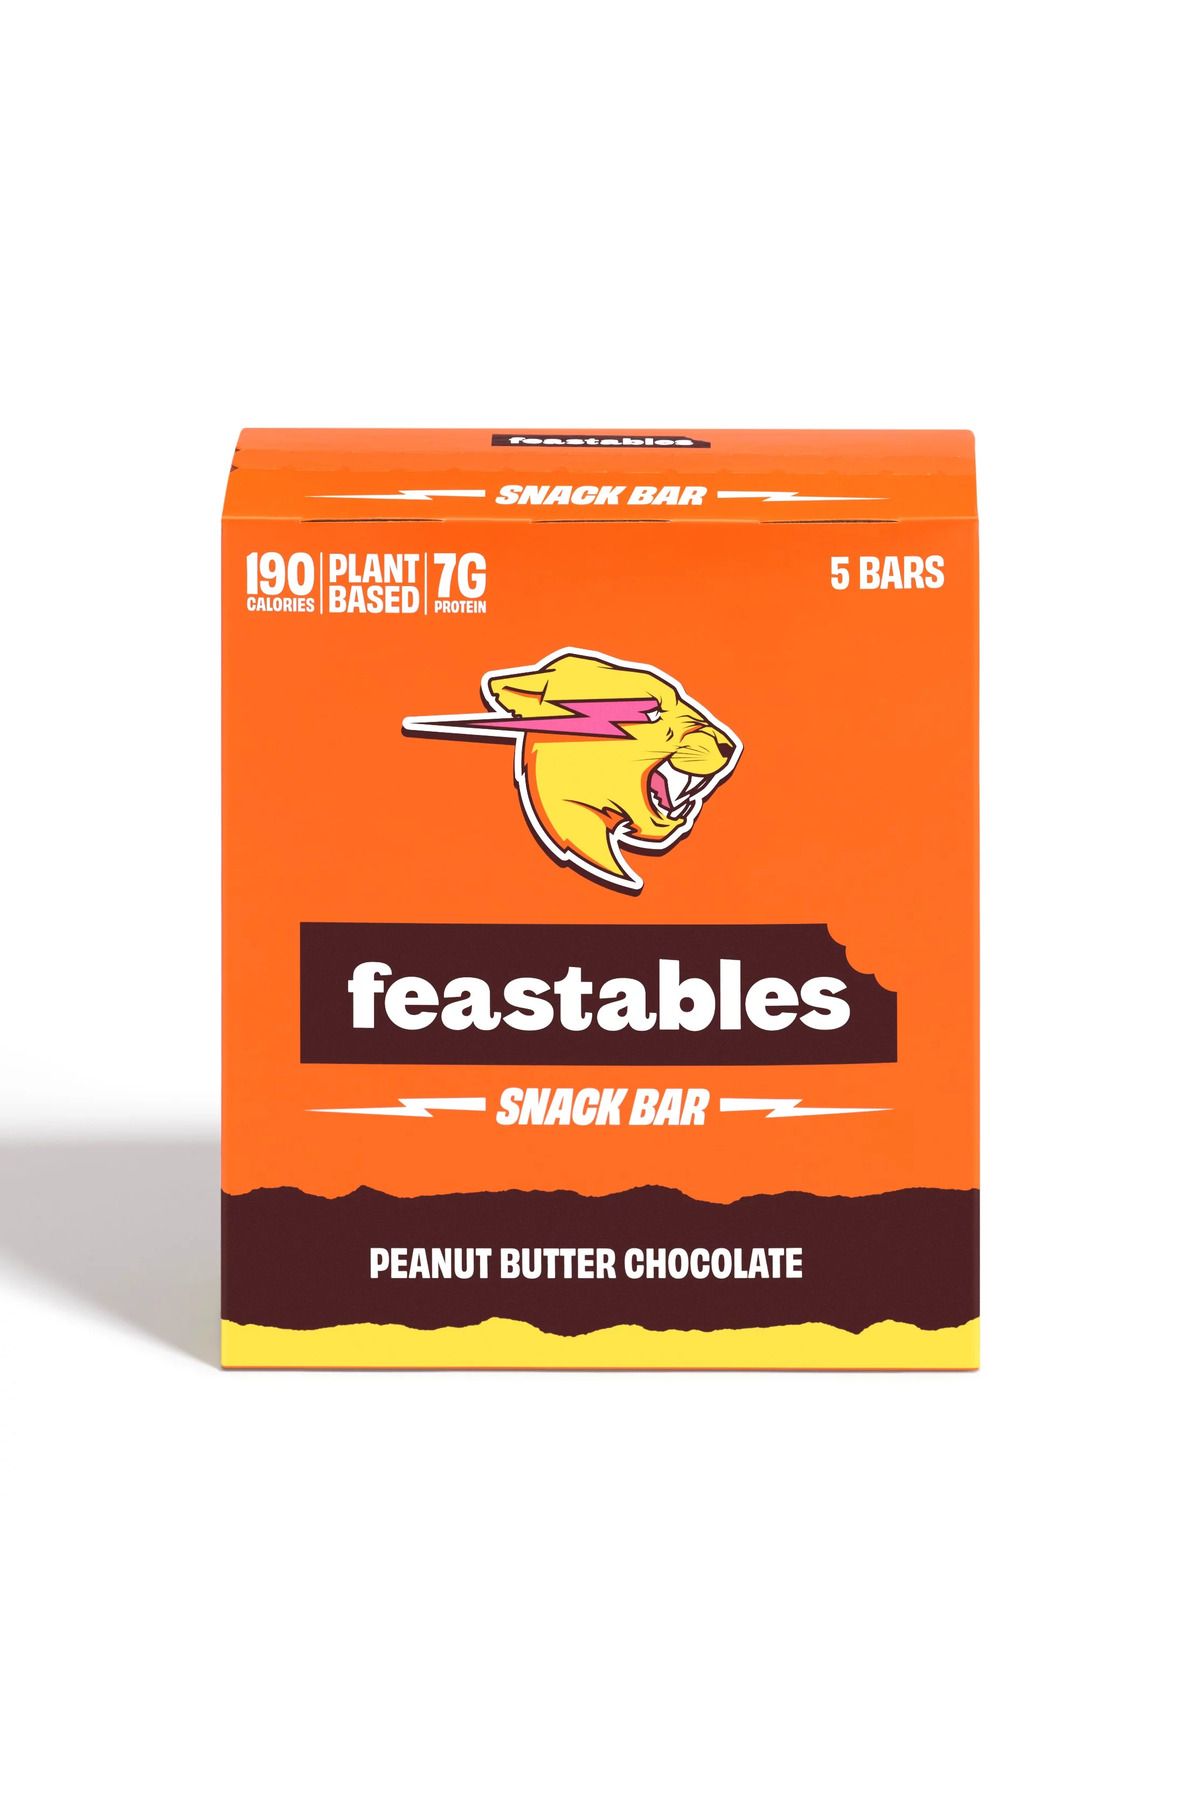 Feastables Mr Beast Feastables Snack Bar Peanut Butter Chocolate 5 Bars